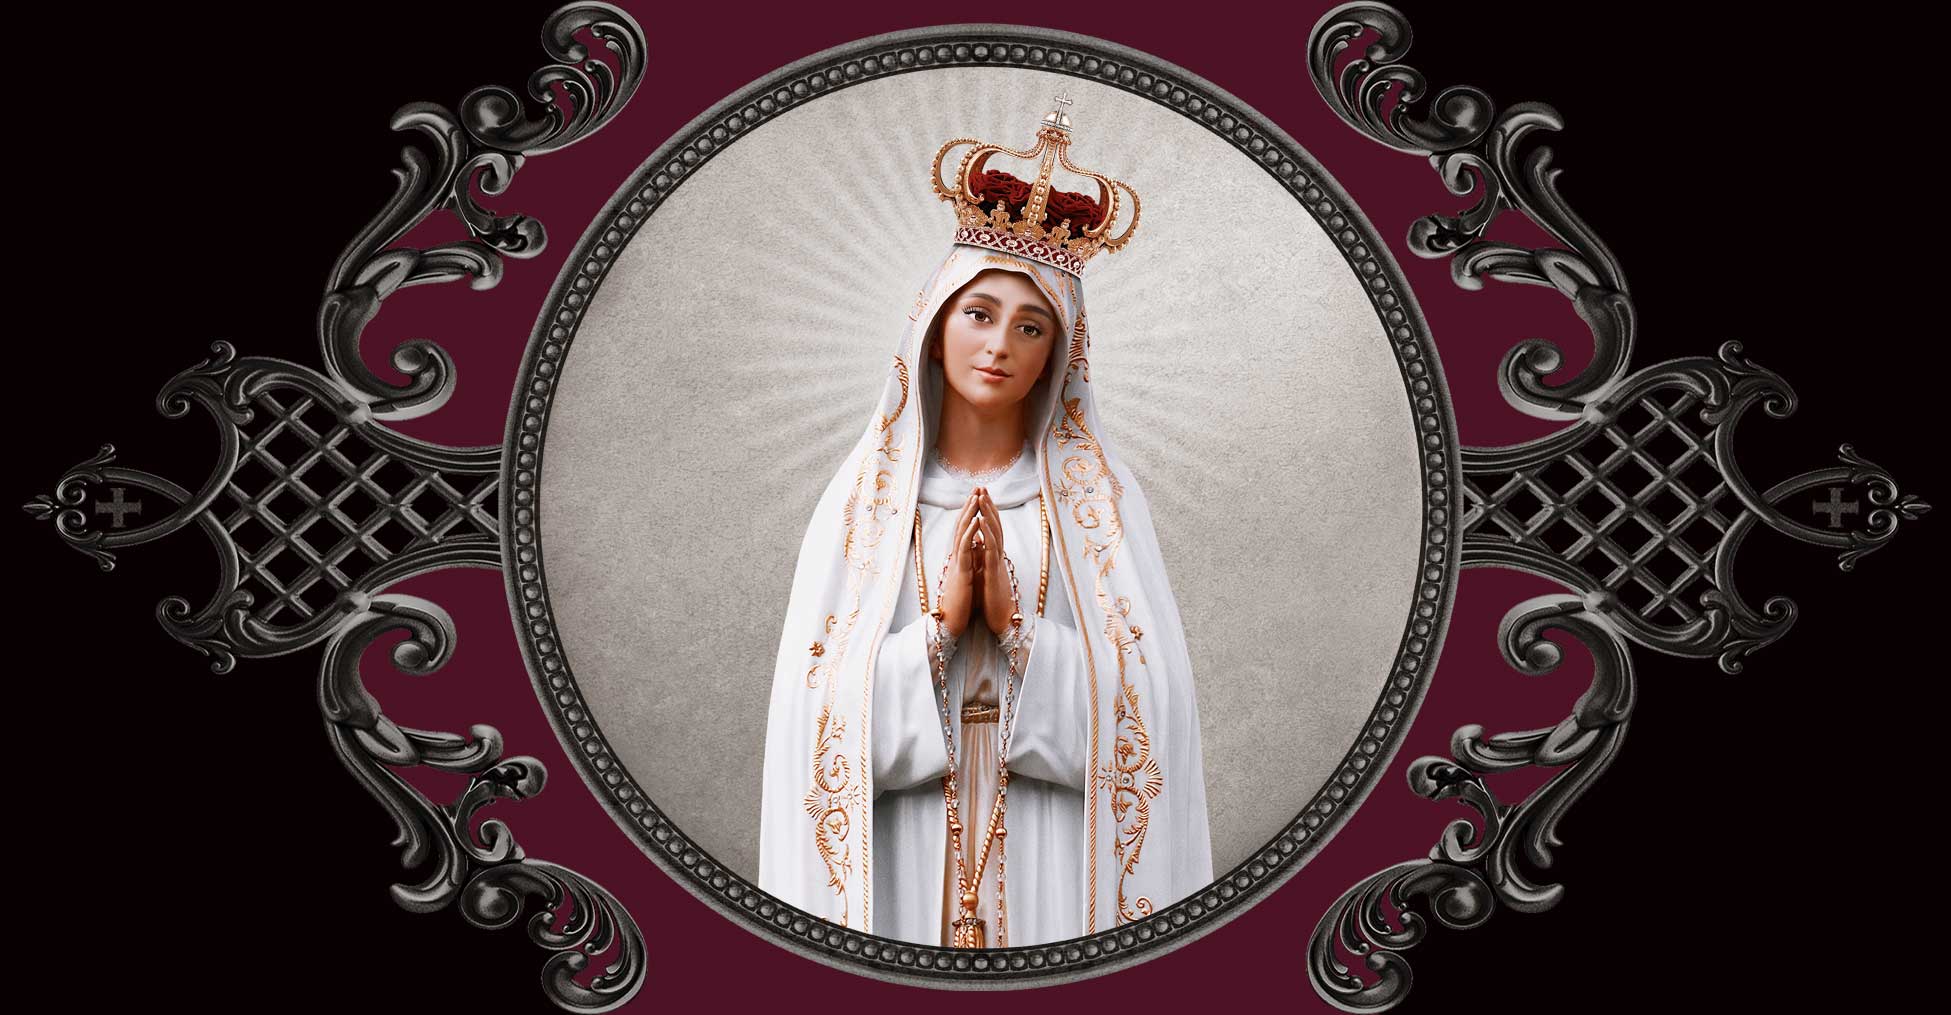 May 13 + Our Lady of Fatima - VENXARA®